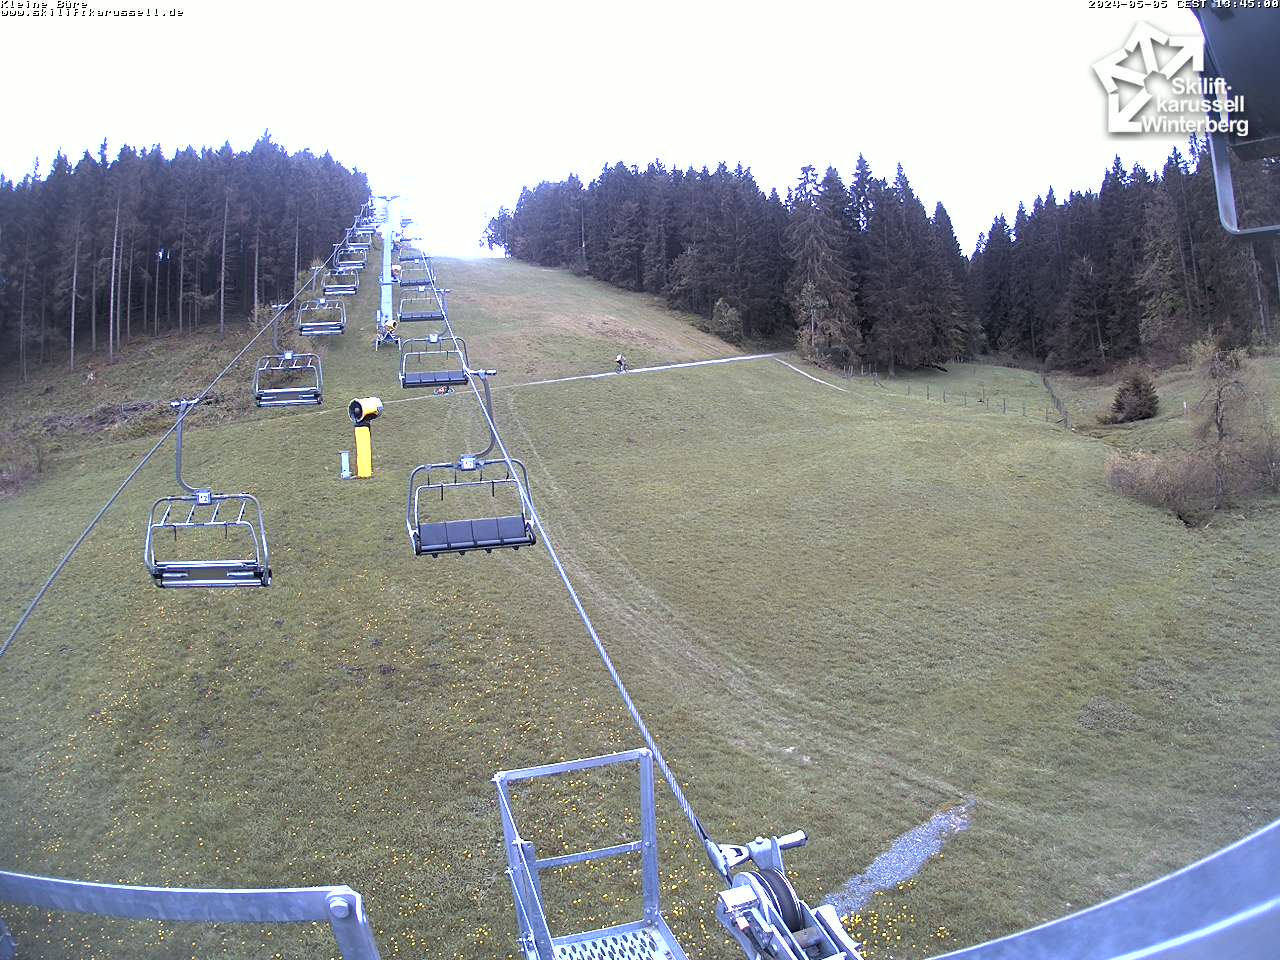 Webcam Kleine Büre - Skiliftkarussell Winterberg